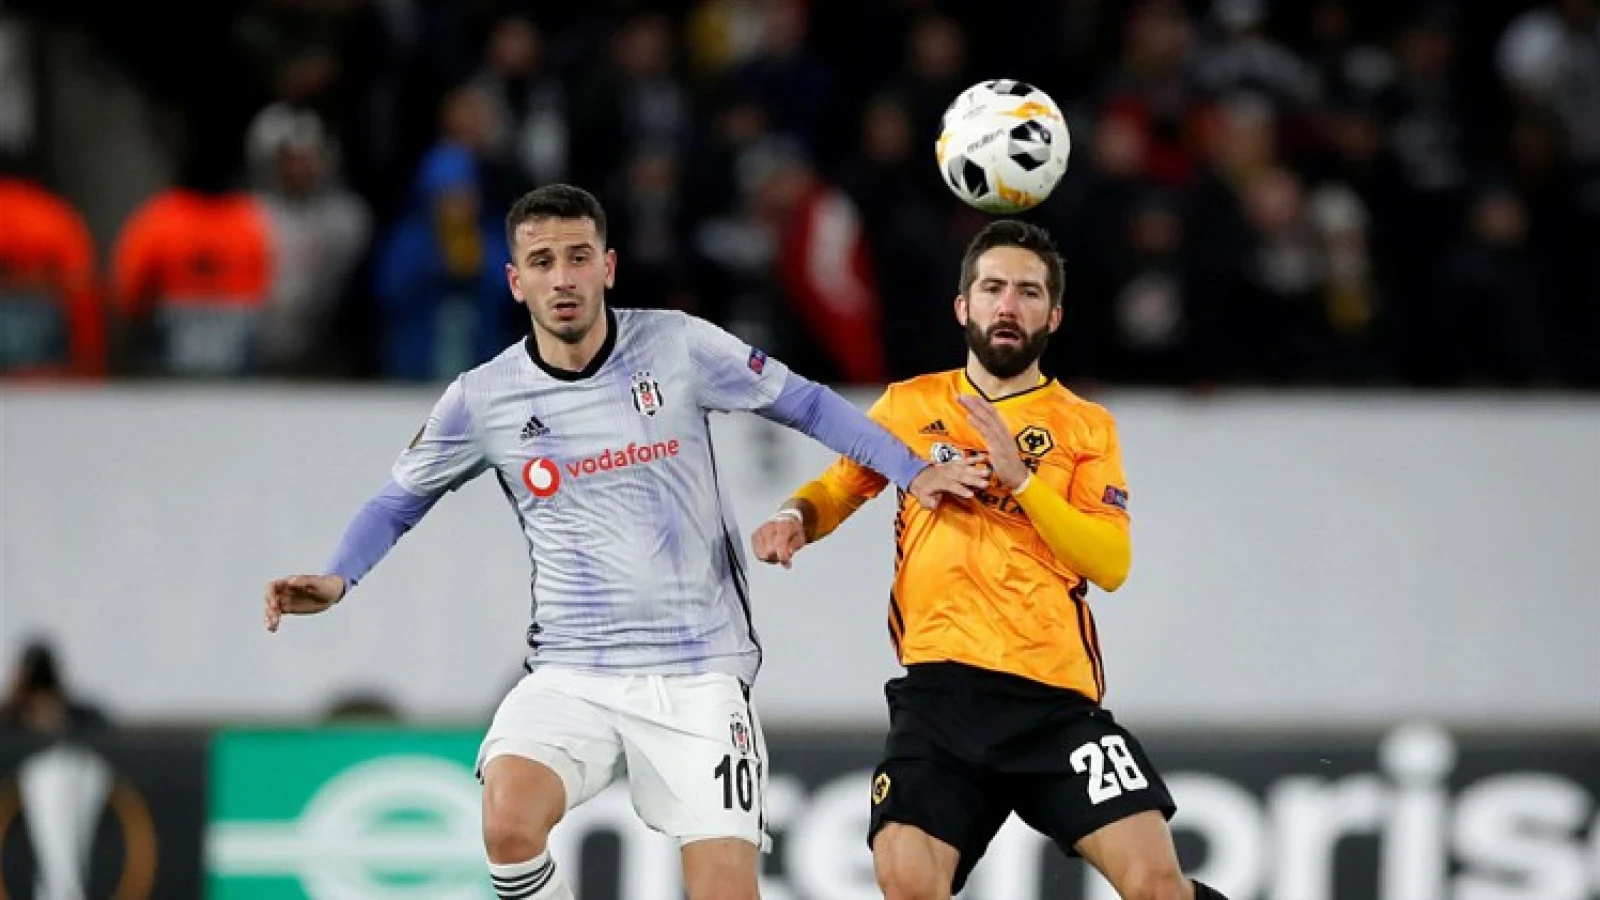 OFFICIEEL | Oğuzhan Özyakup op huurbasis naar Feyenoord